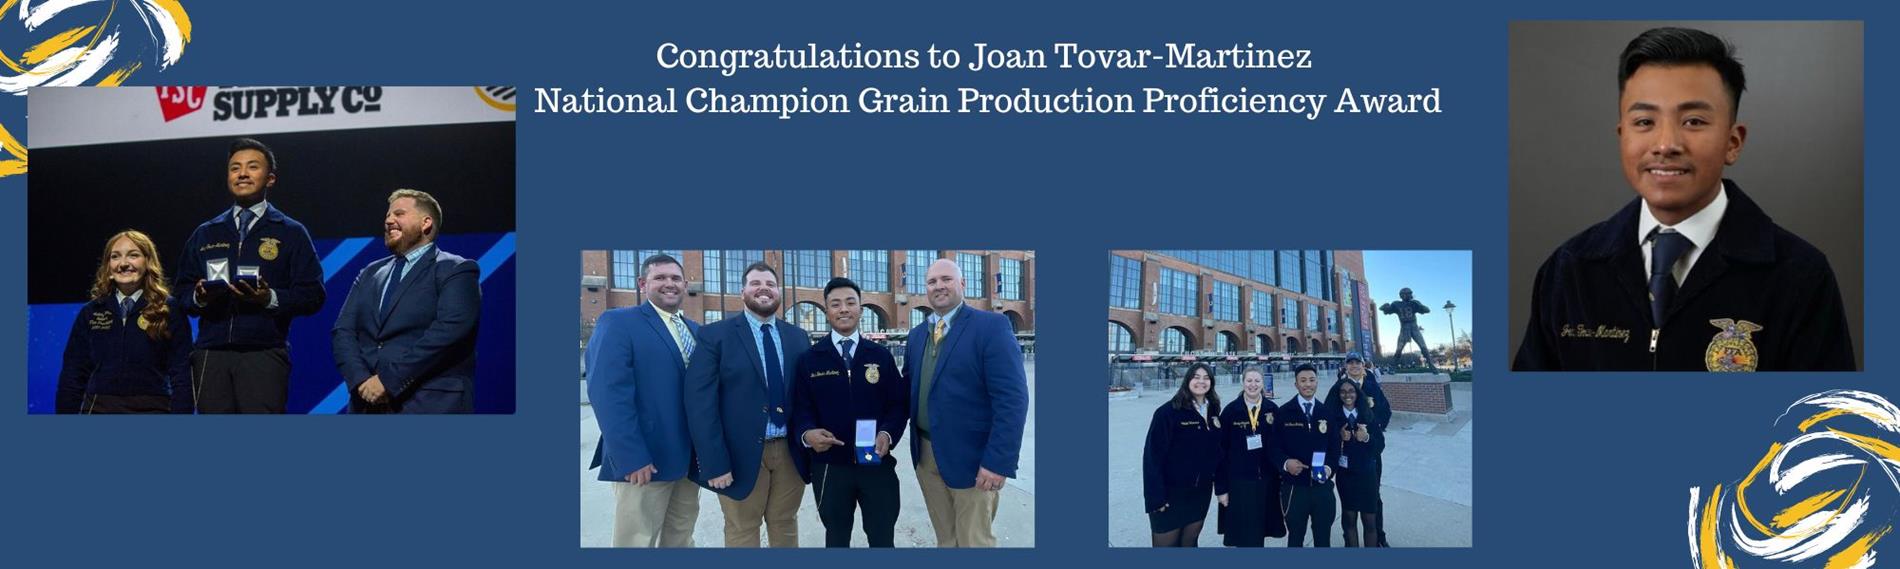 Joan Tovar-Martinez   National Champion Grain Production Proficiency Award 